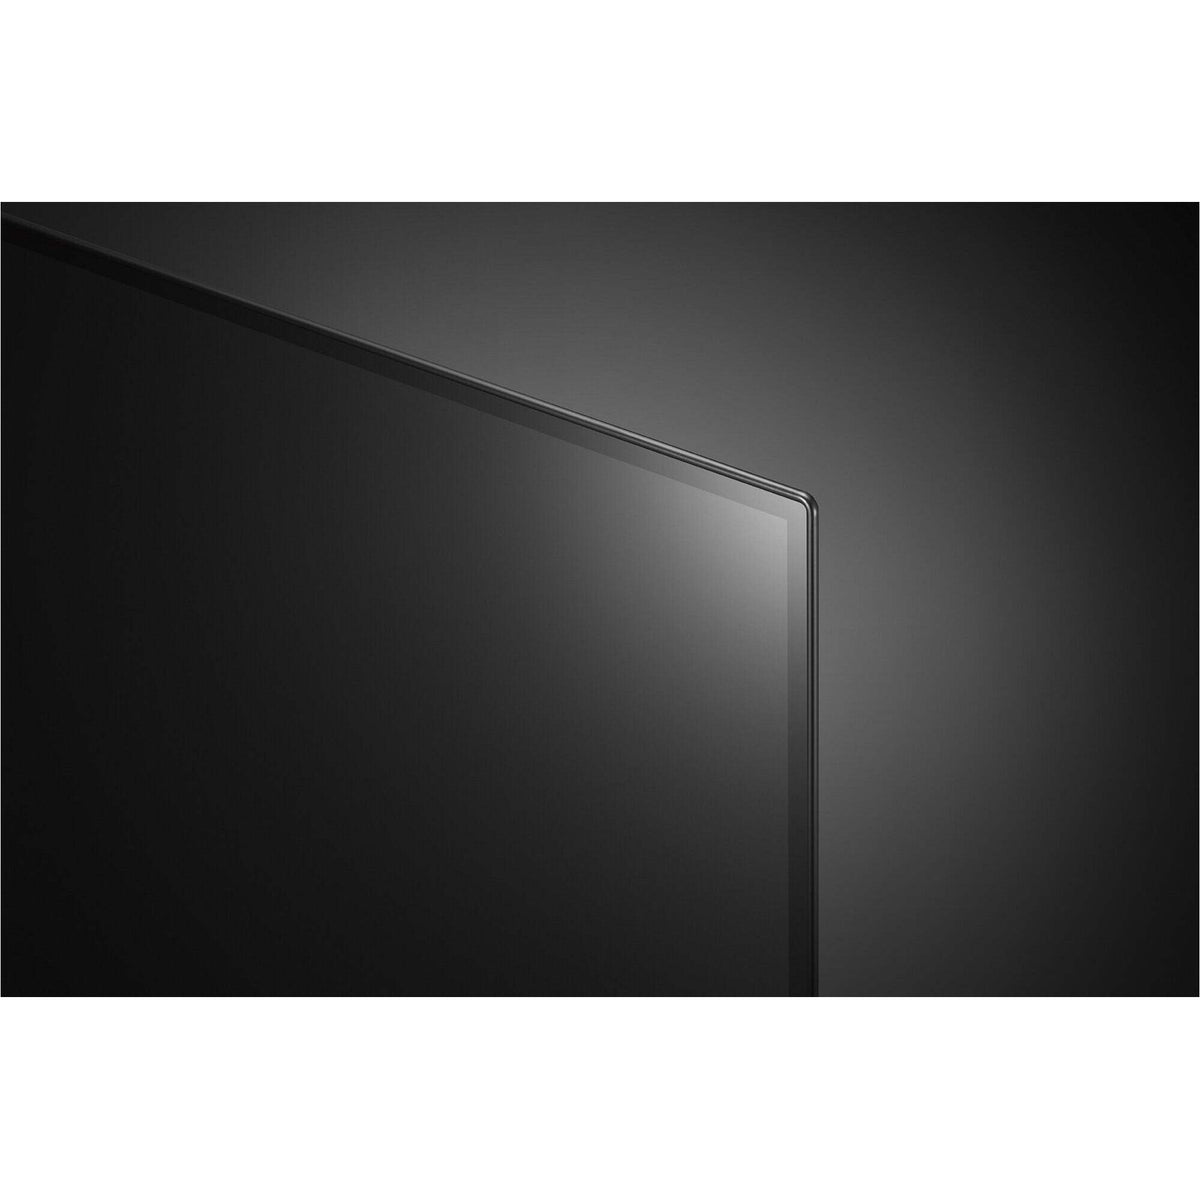 Smart televízor LG OLED65C11 (2021) / 65&quot; (164 cm)